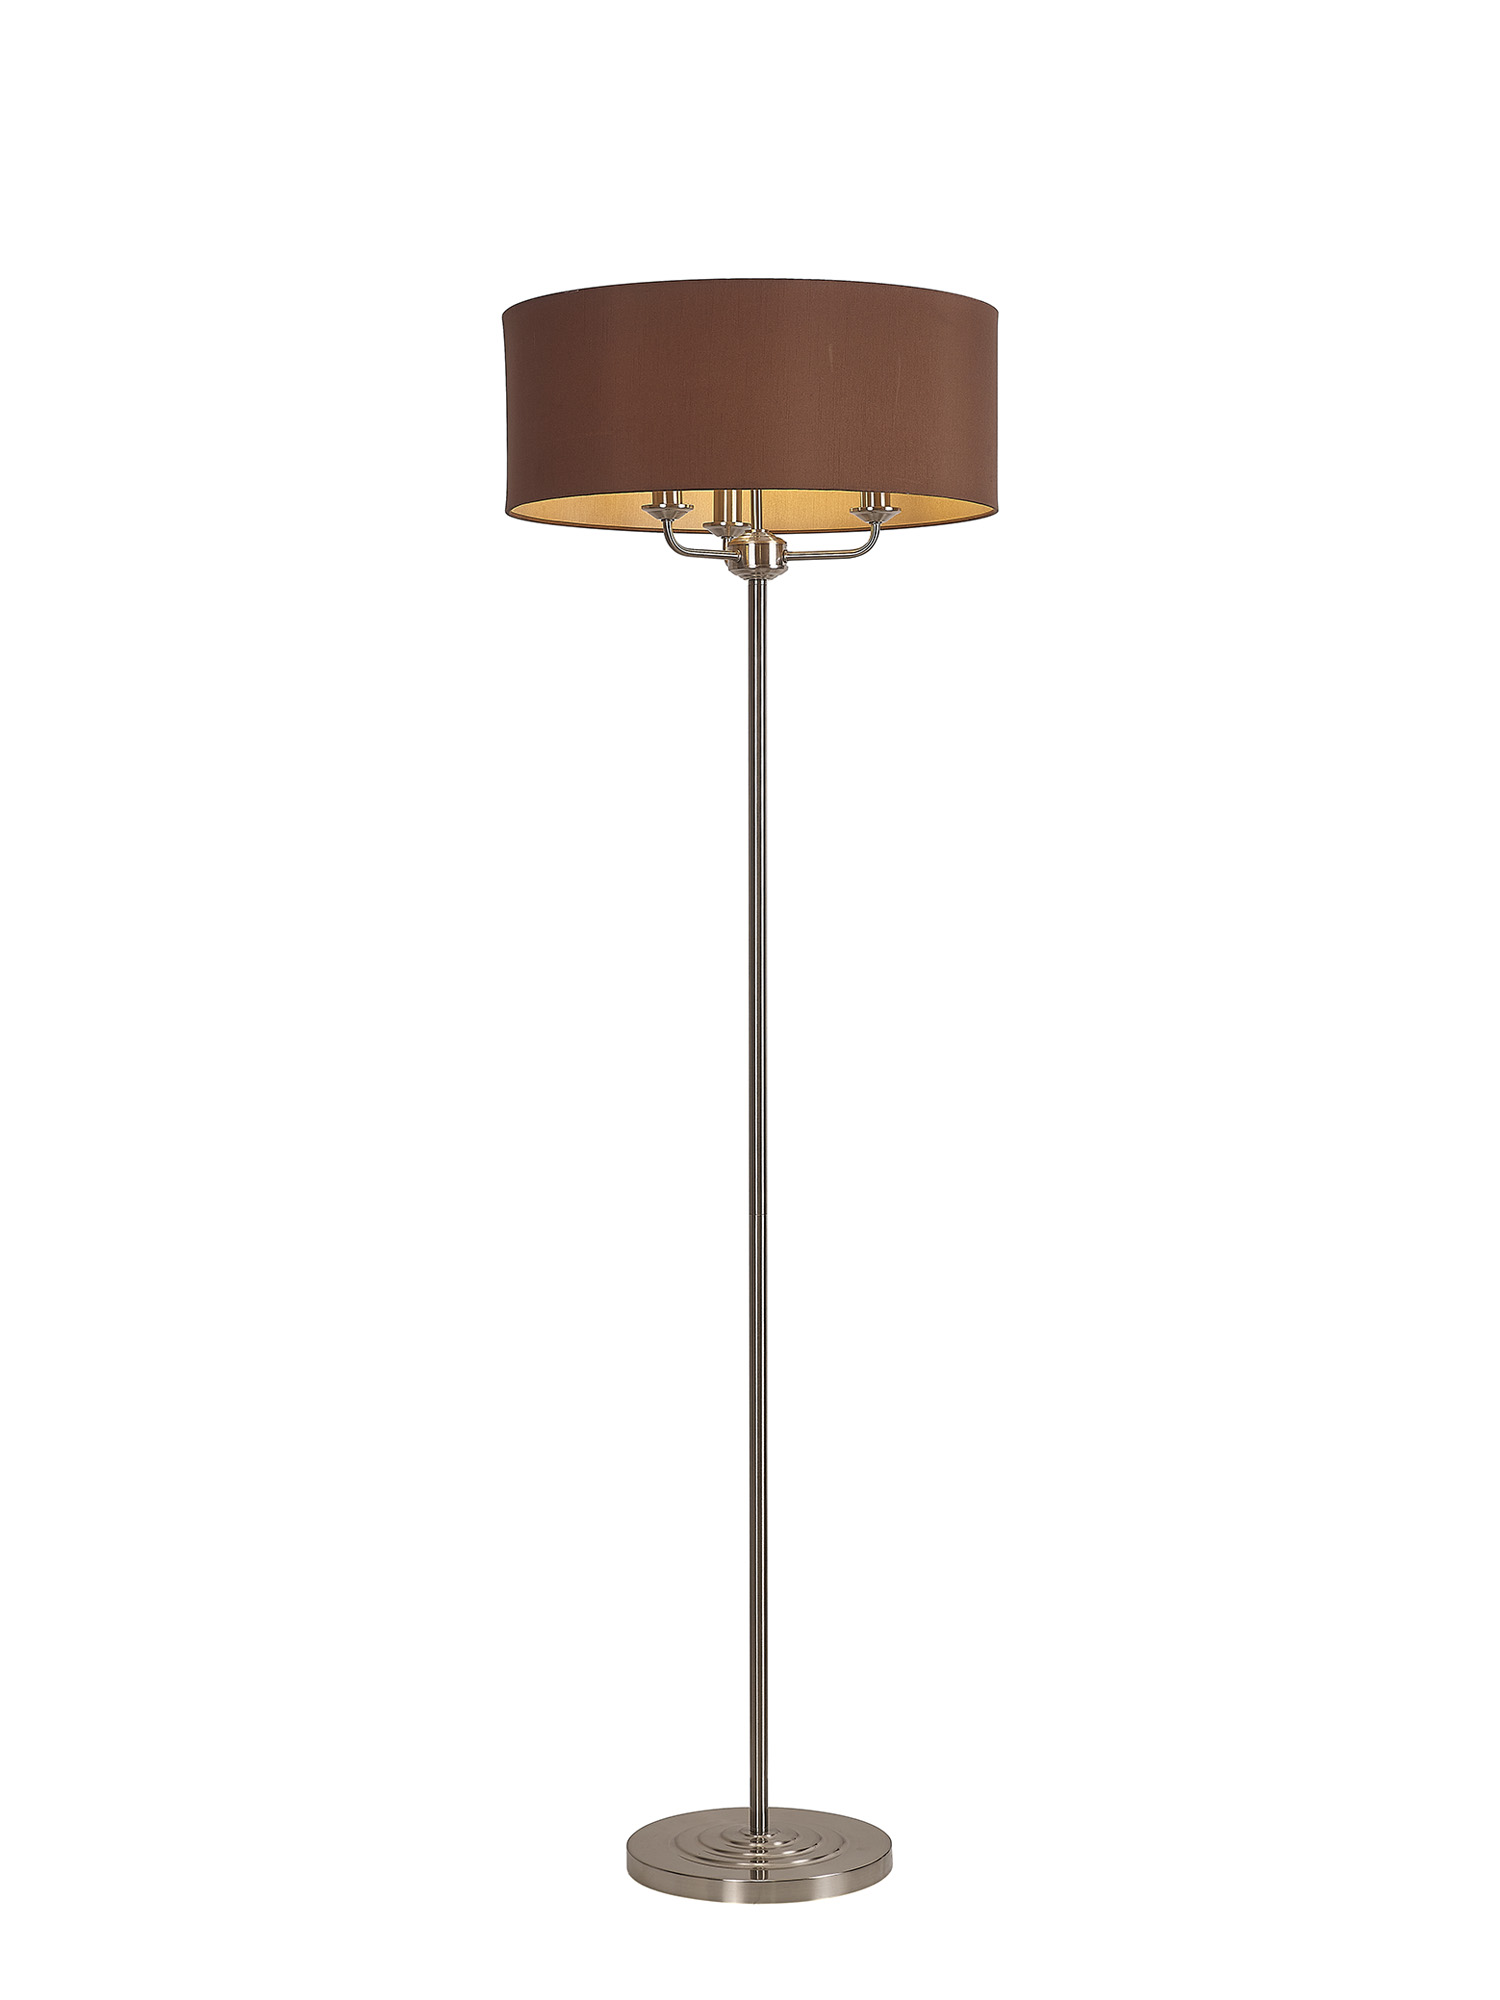 DK0937  Banyan 45cm 3 Light Floor Lamp Satin Nickel, Raw Cocoa